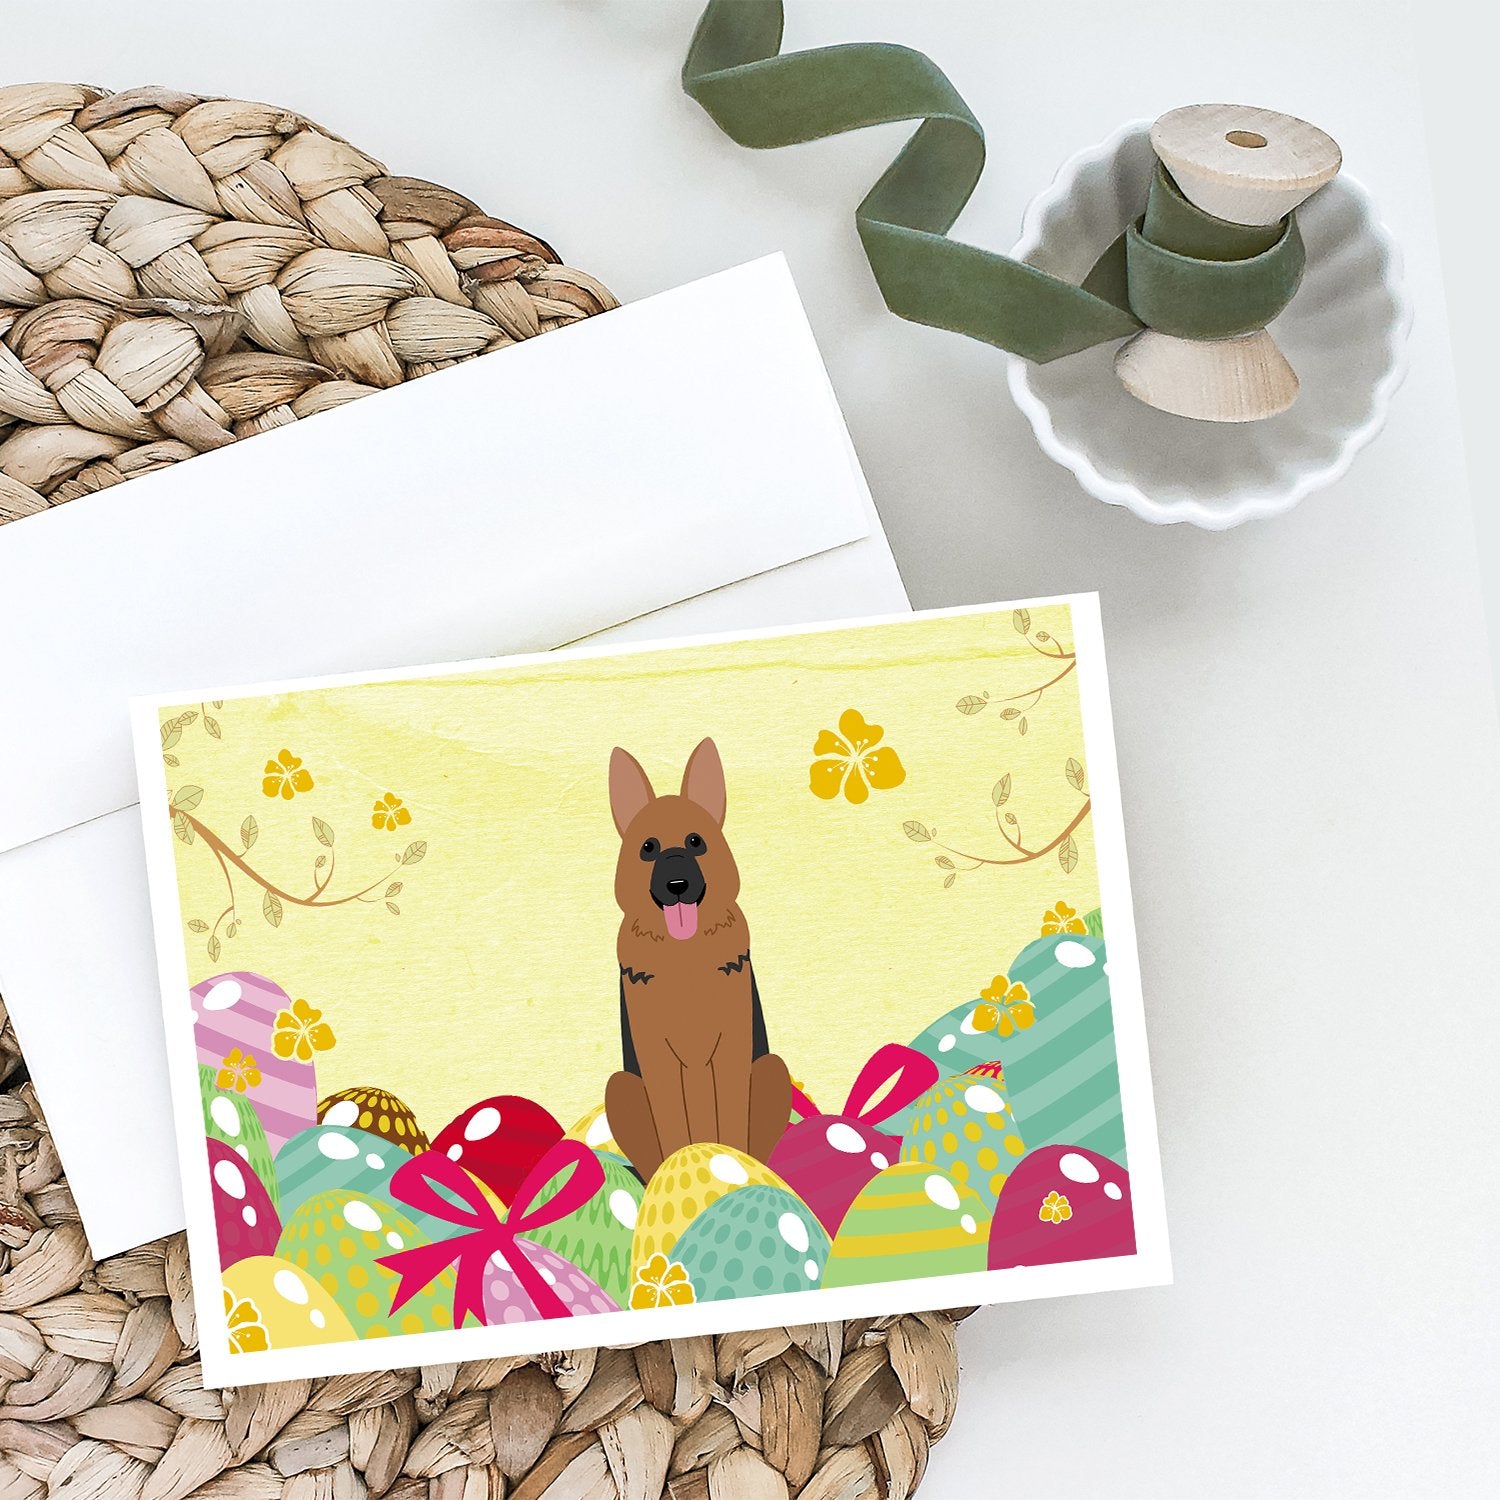 Buy this Easter Eggs German Shepherd Greeting Cards and Envelopes Pack of 8